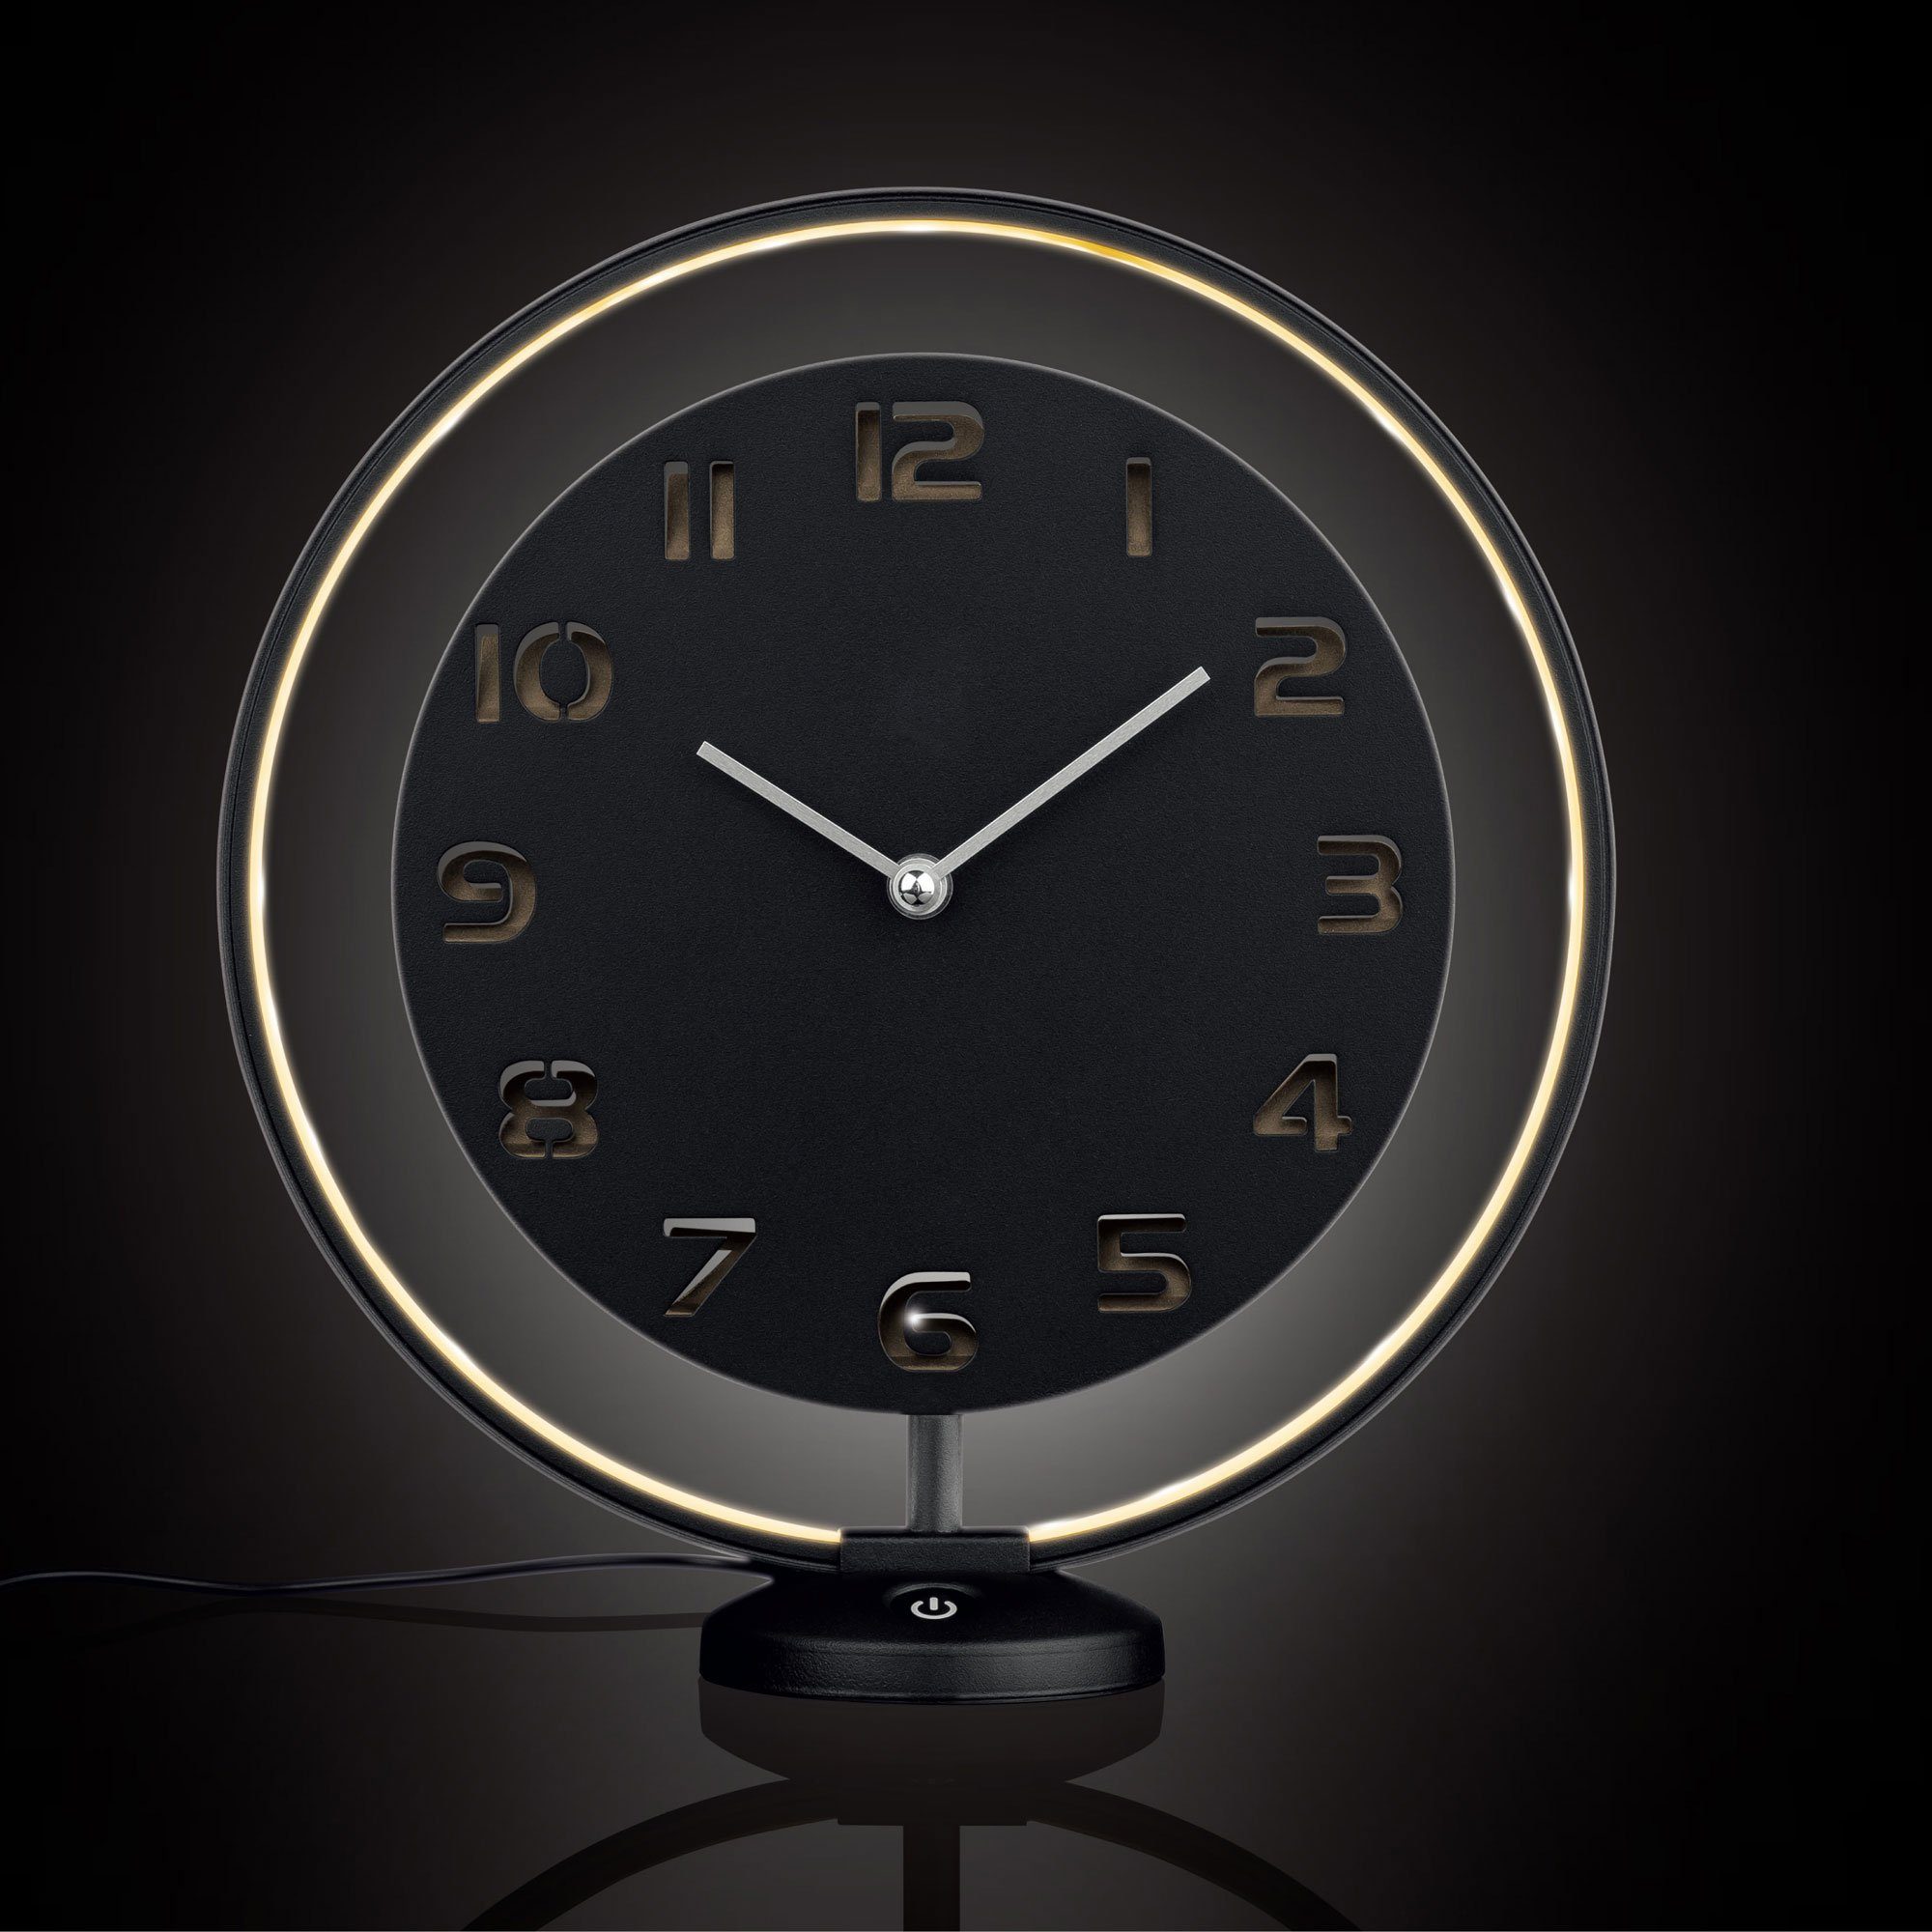 Miraval LED Uhr mit Tischuhr Design Miraval